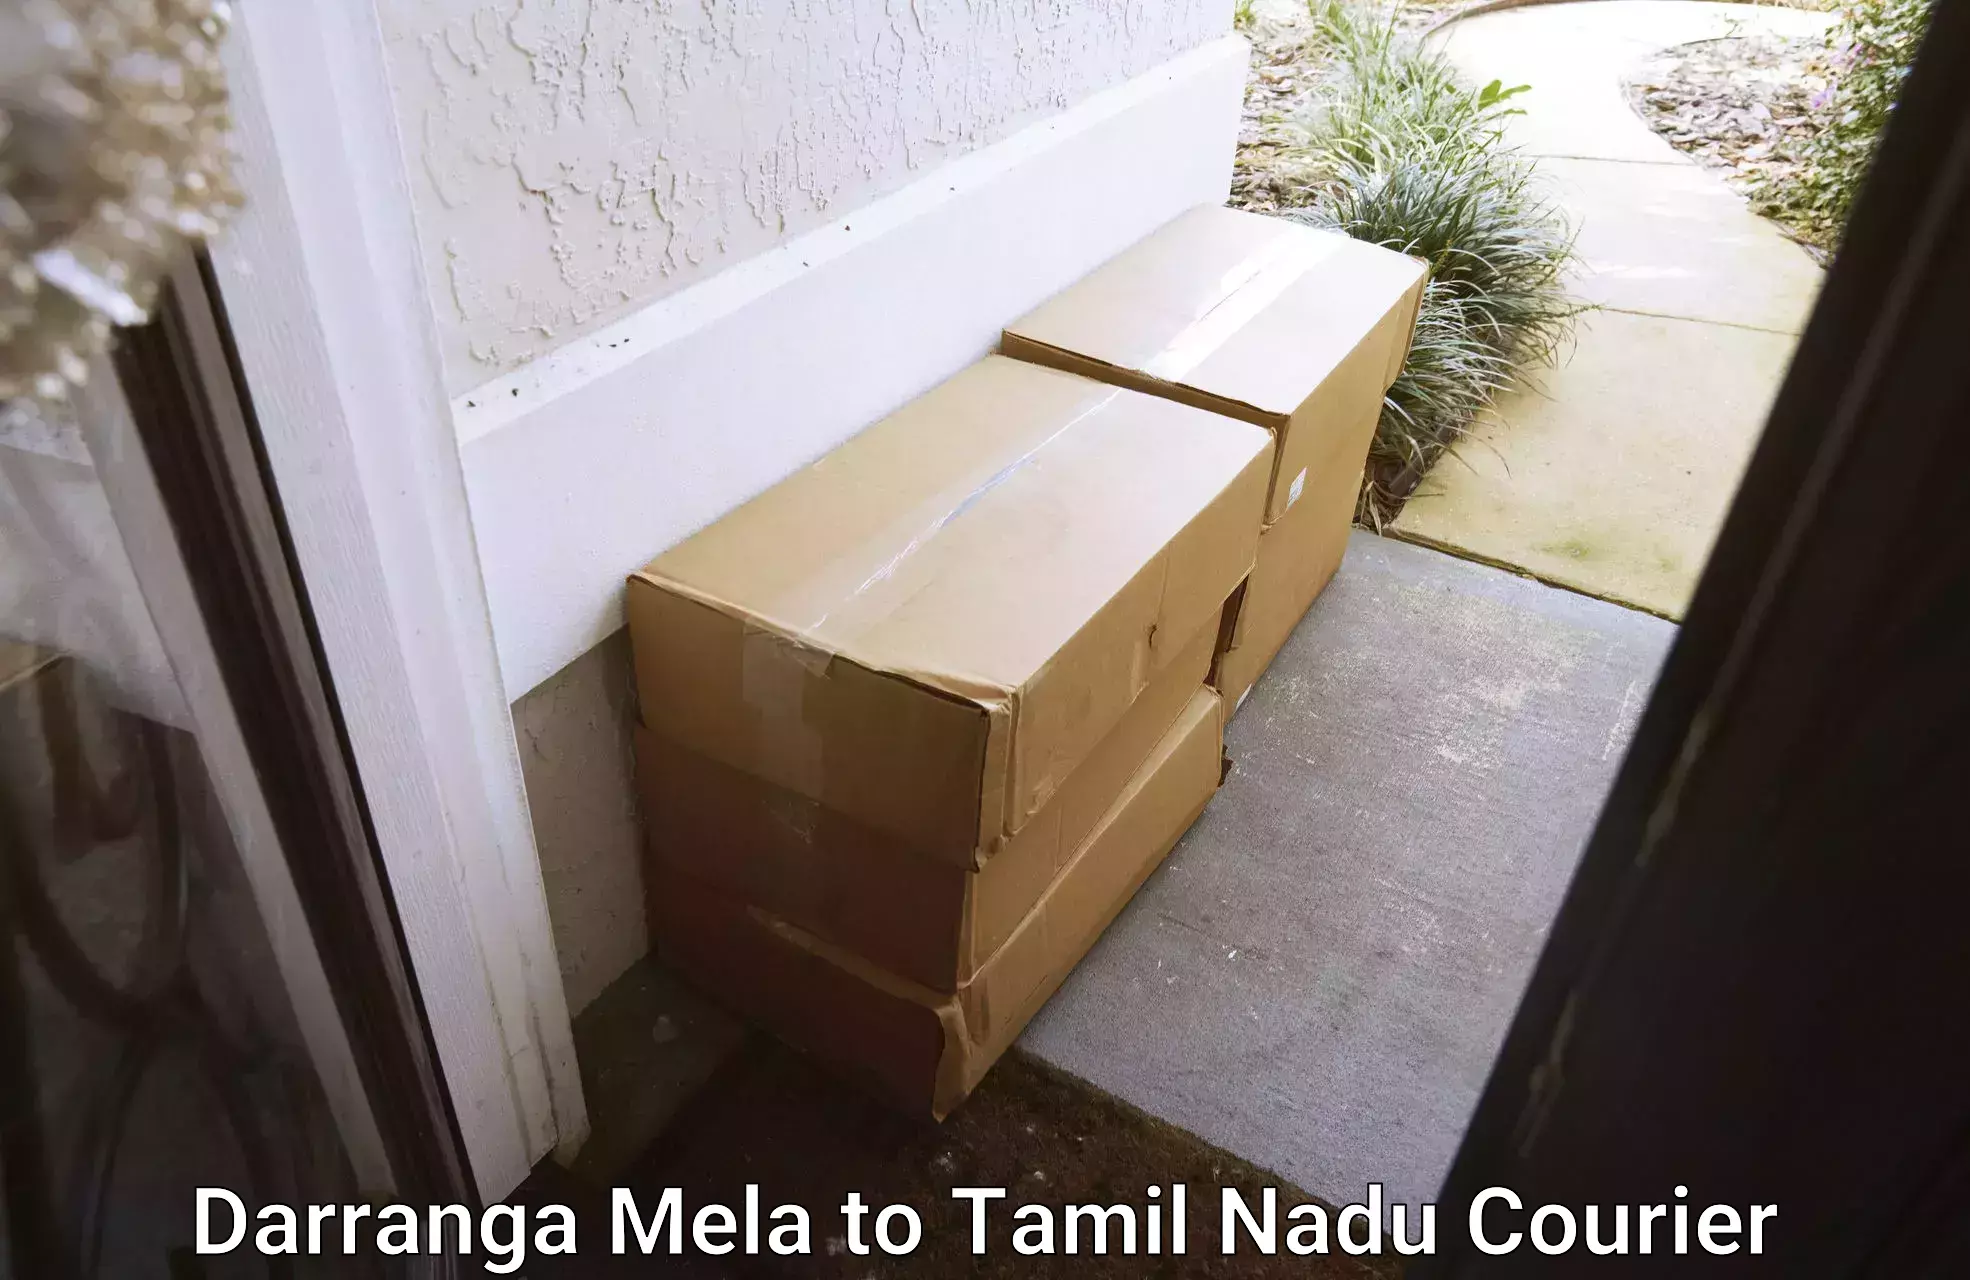 Courier service partnerships Darranga Mela to Tamil Nadu